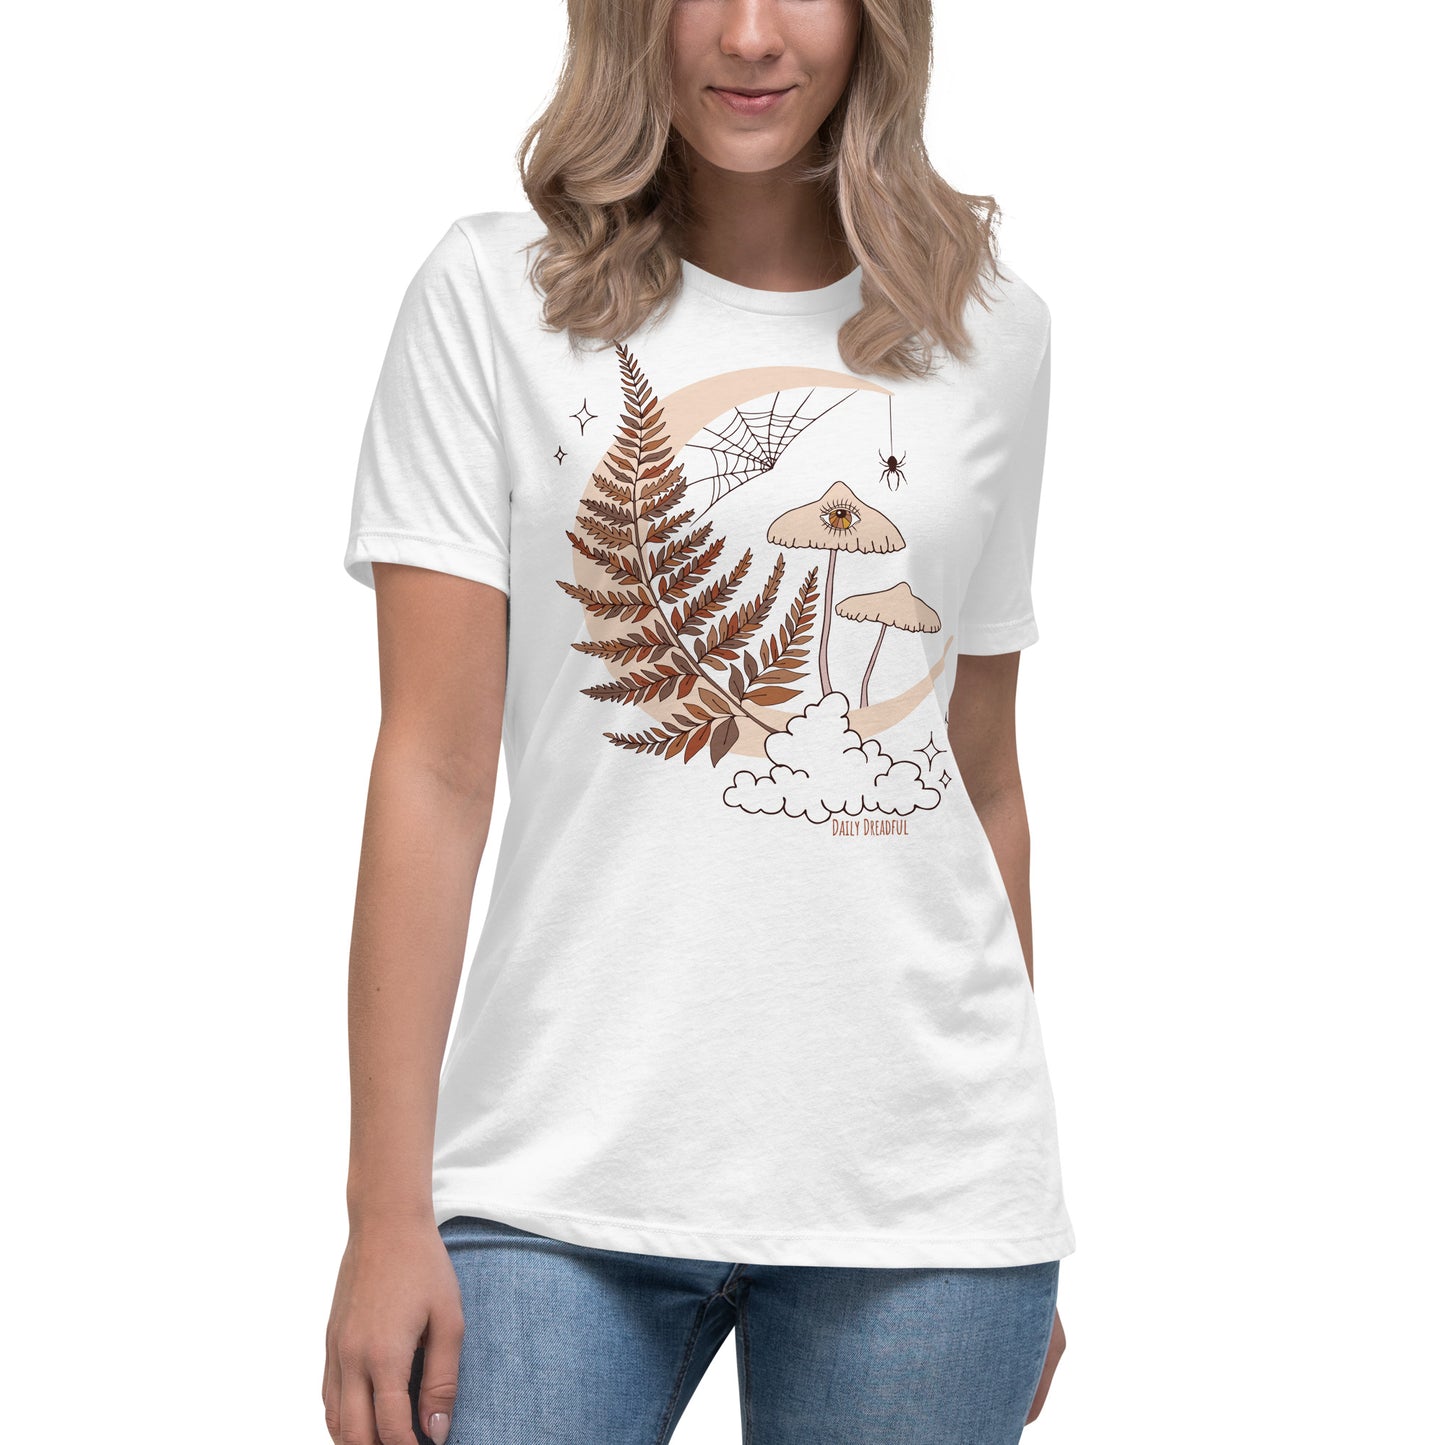 "Magic Mushroom" relaxed t-shirt, white colored tee